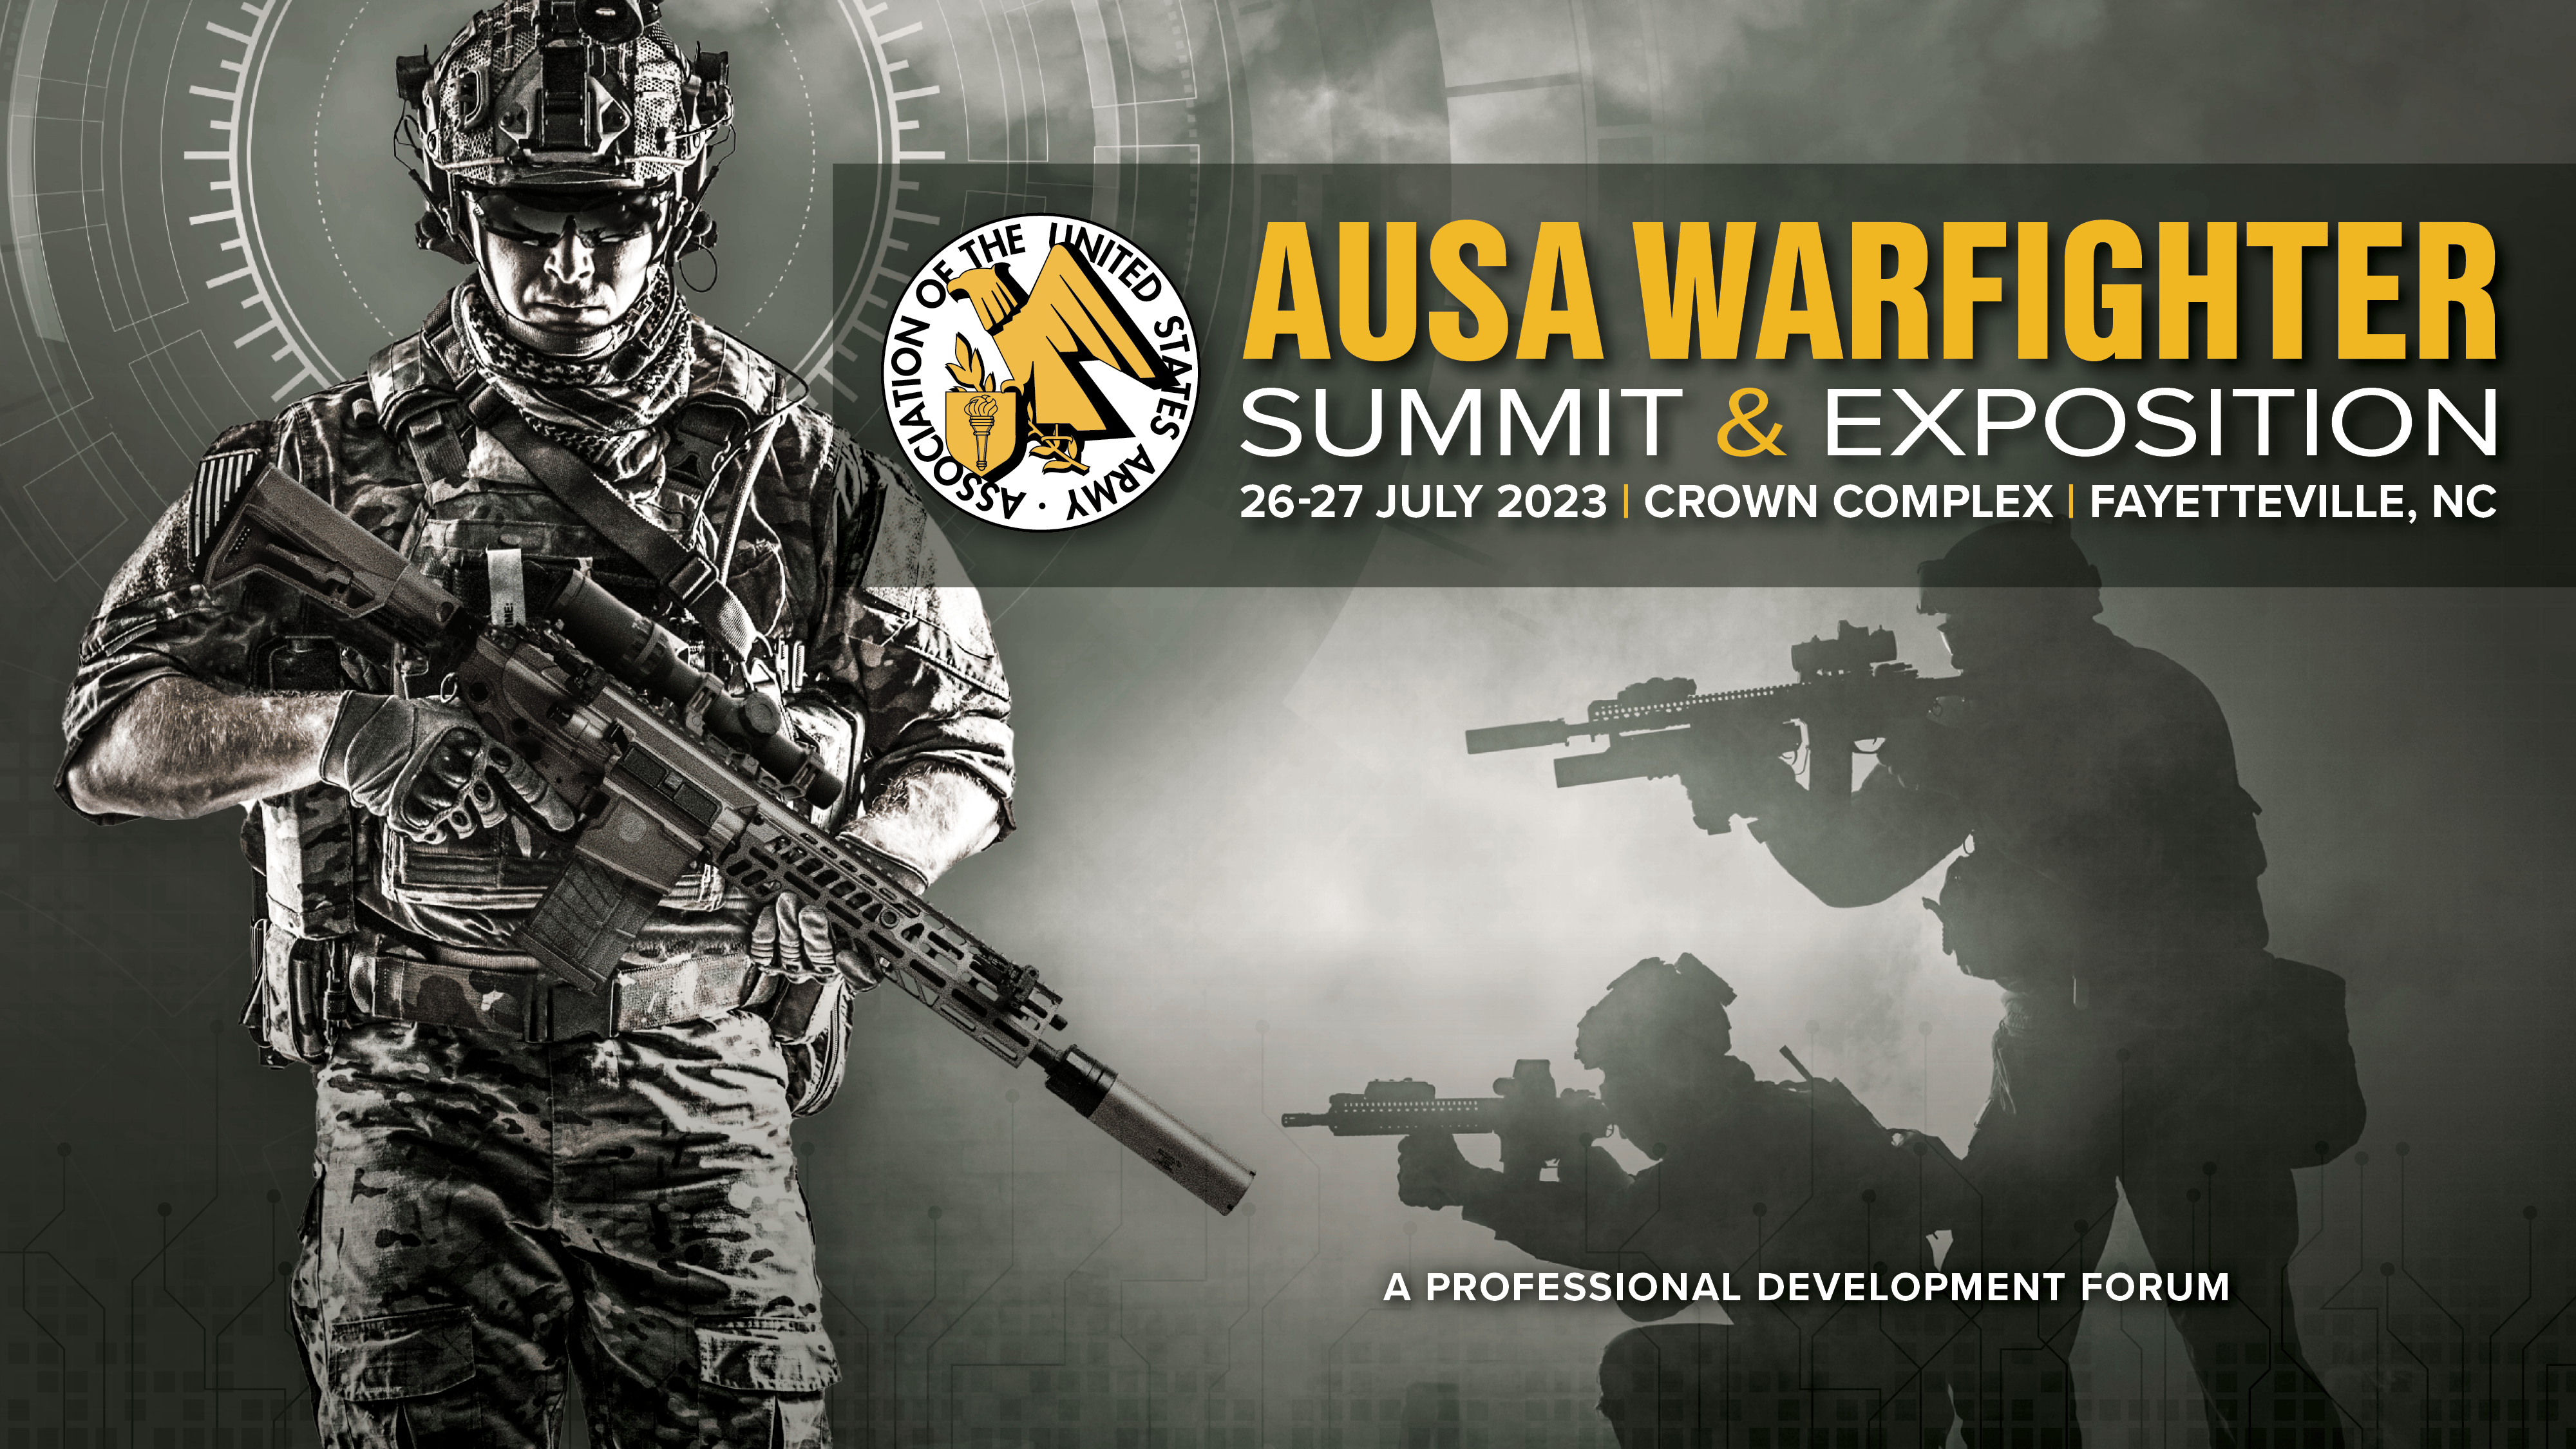 AUSA Warfighter Summit image.